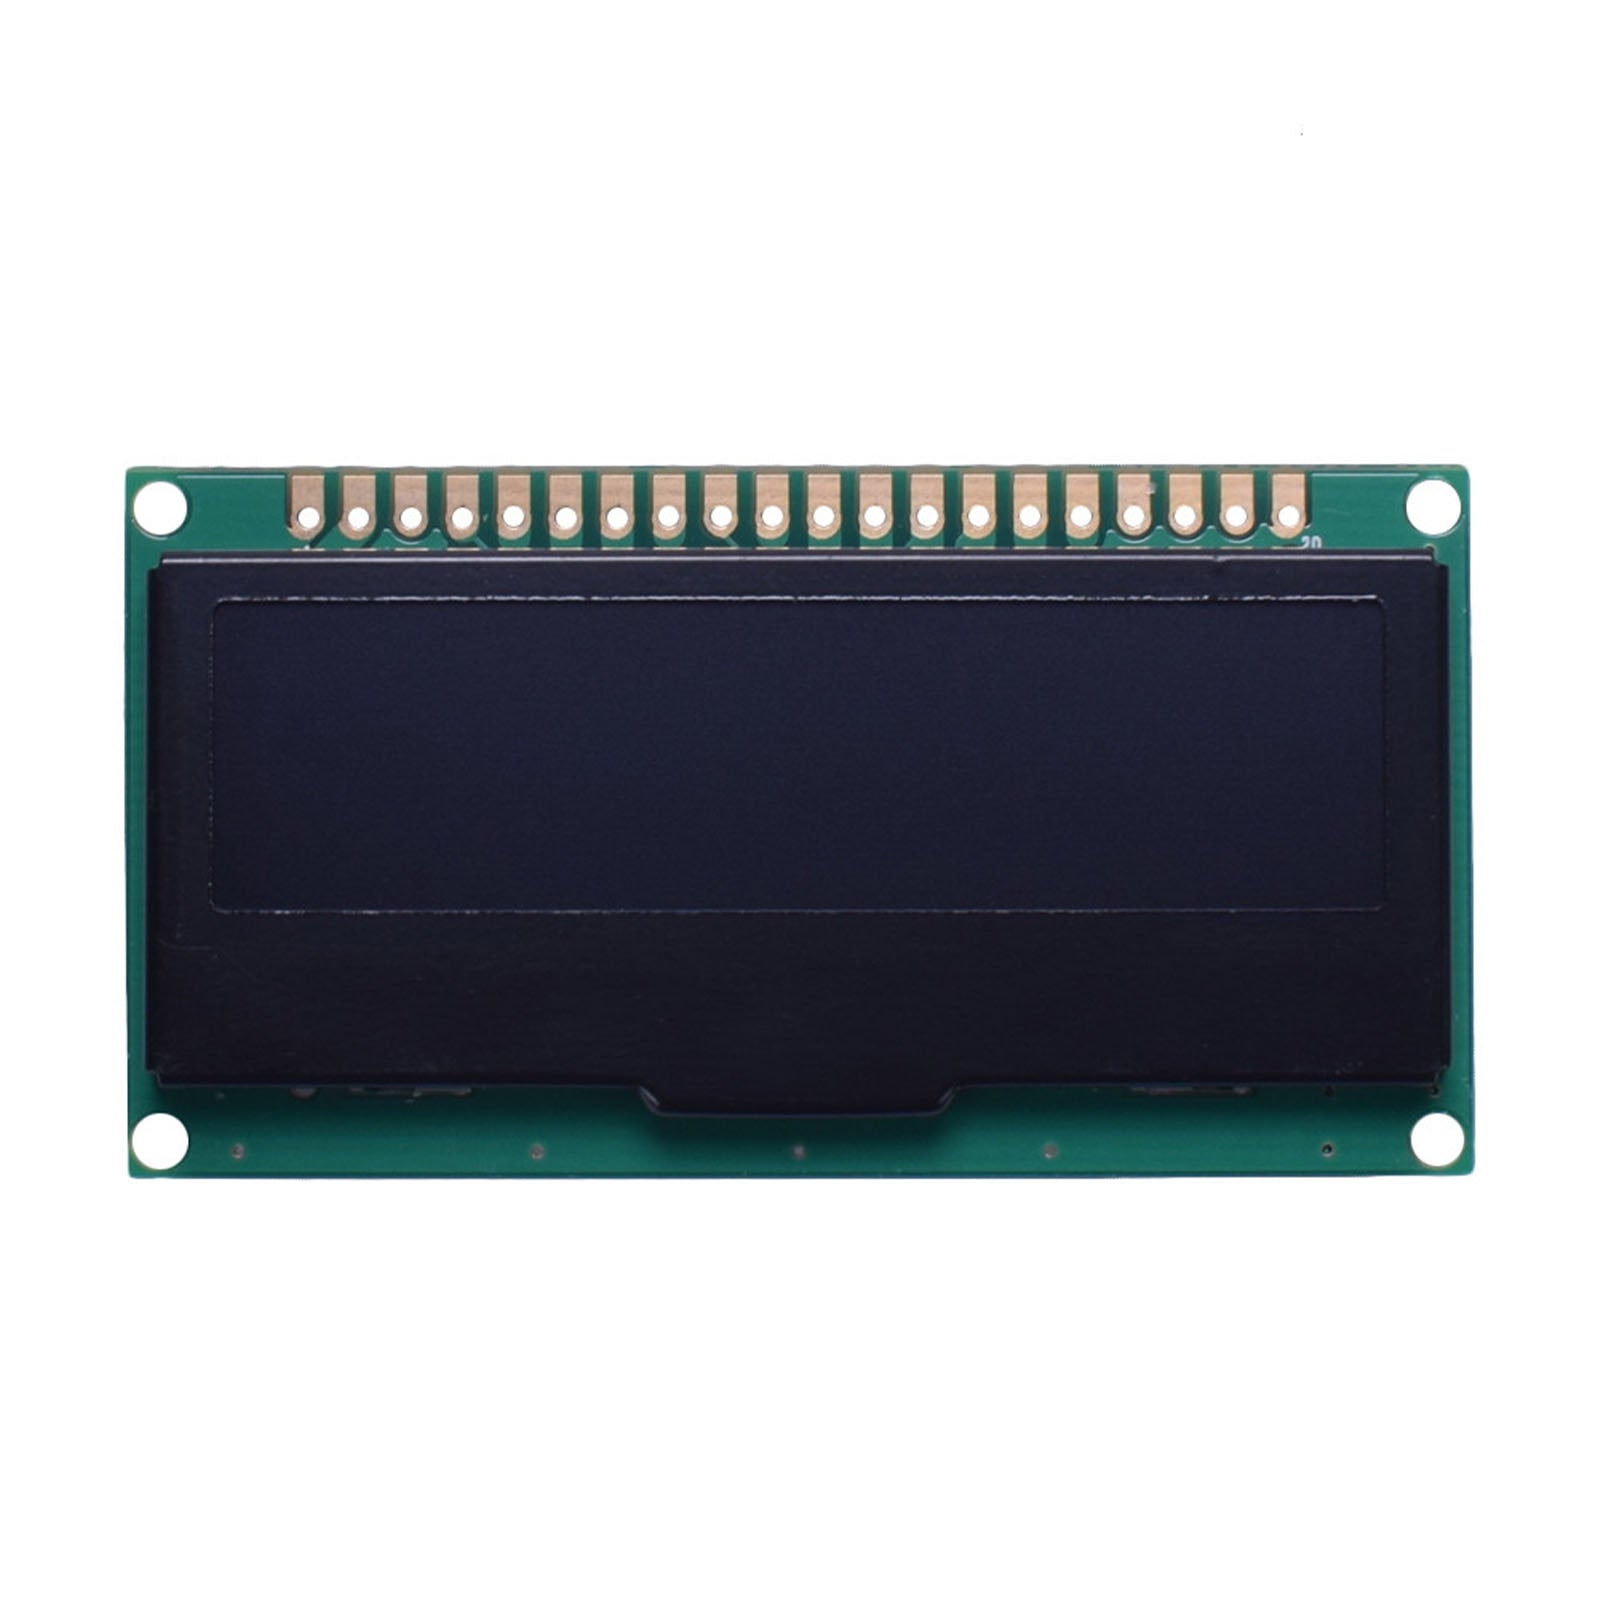 DisplayModule 2.2" 128x32 Blue Graphic OLED Display Module - MCU, SPI, I2C